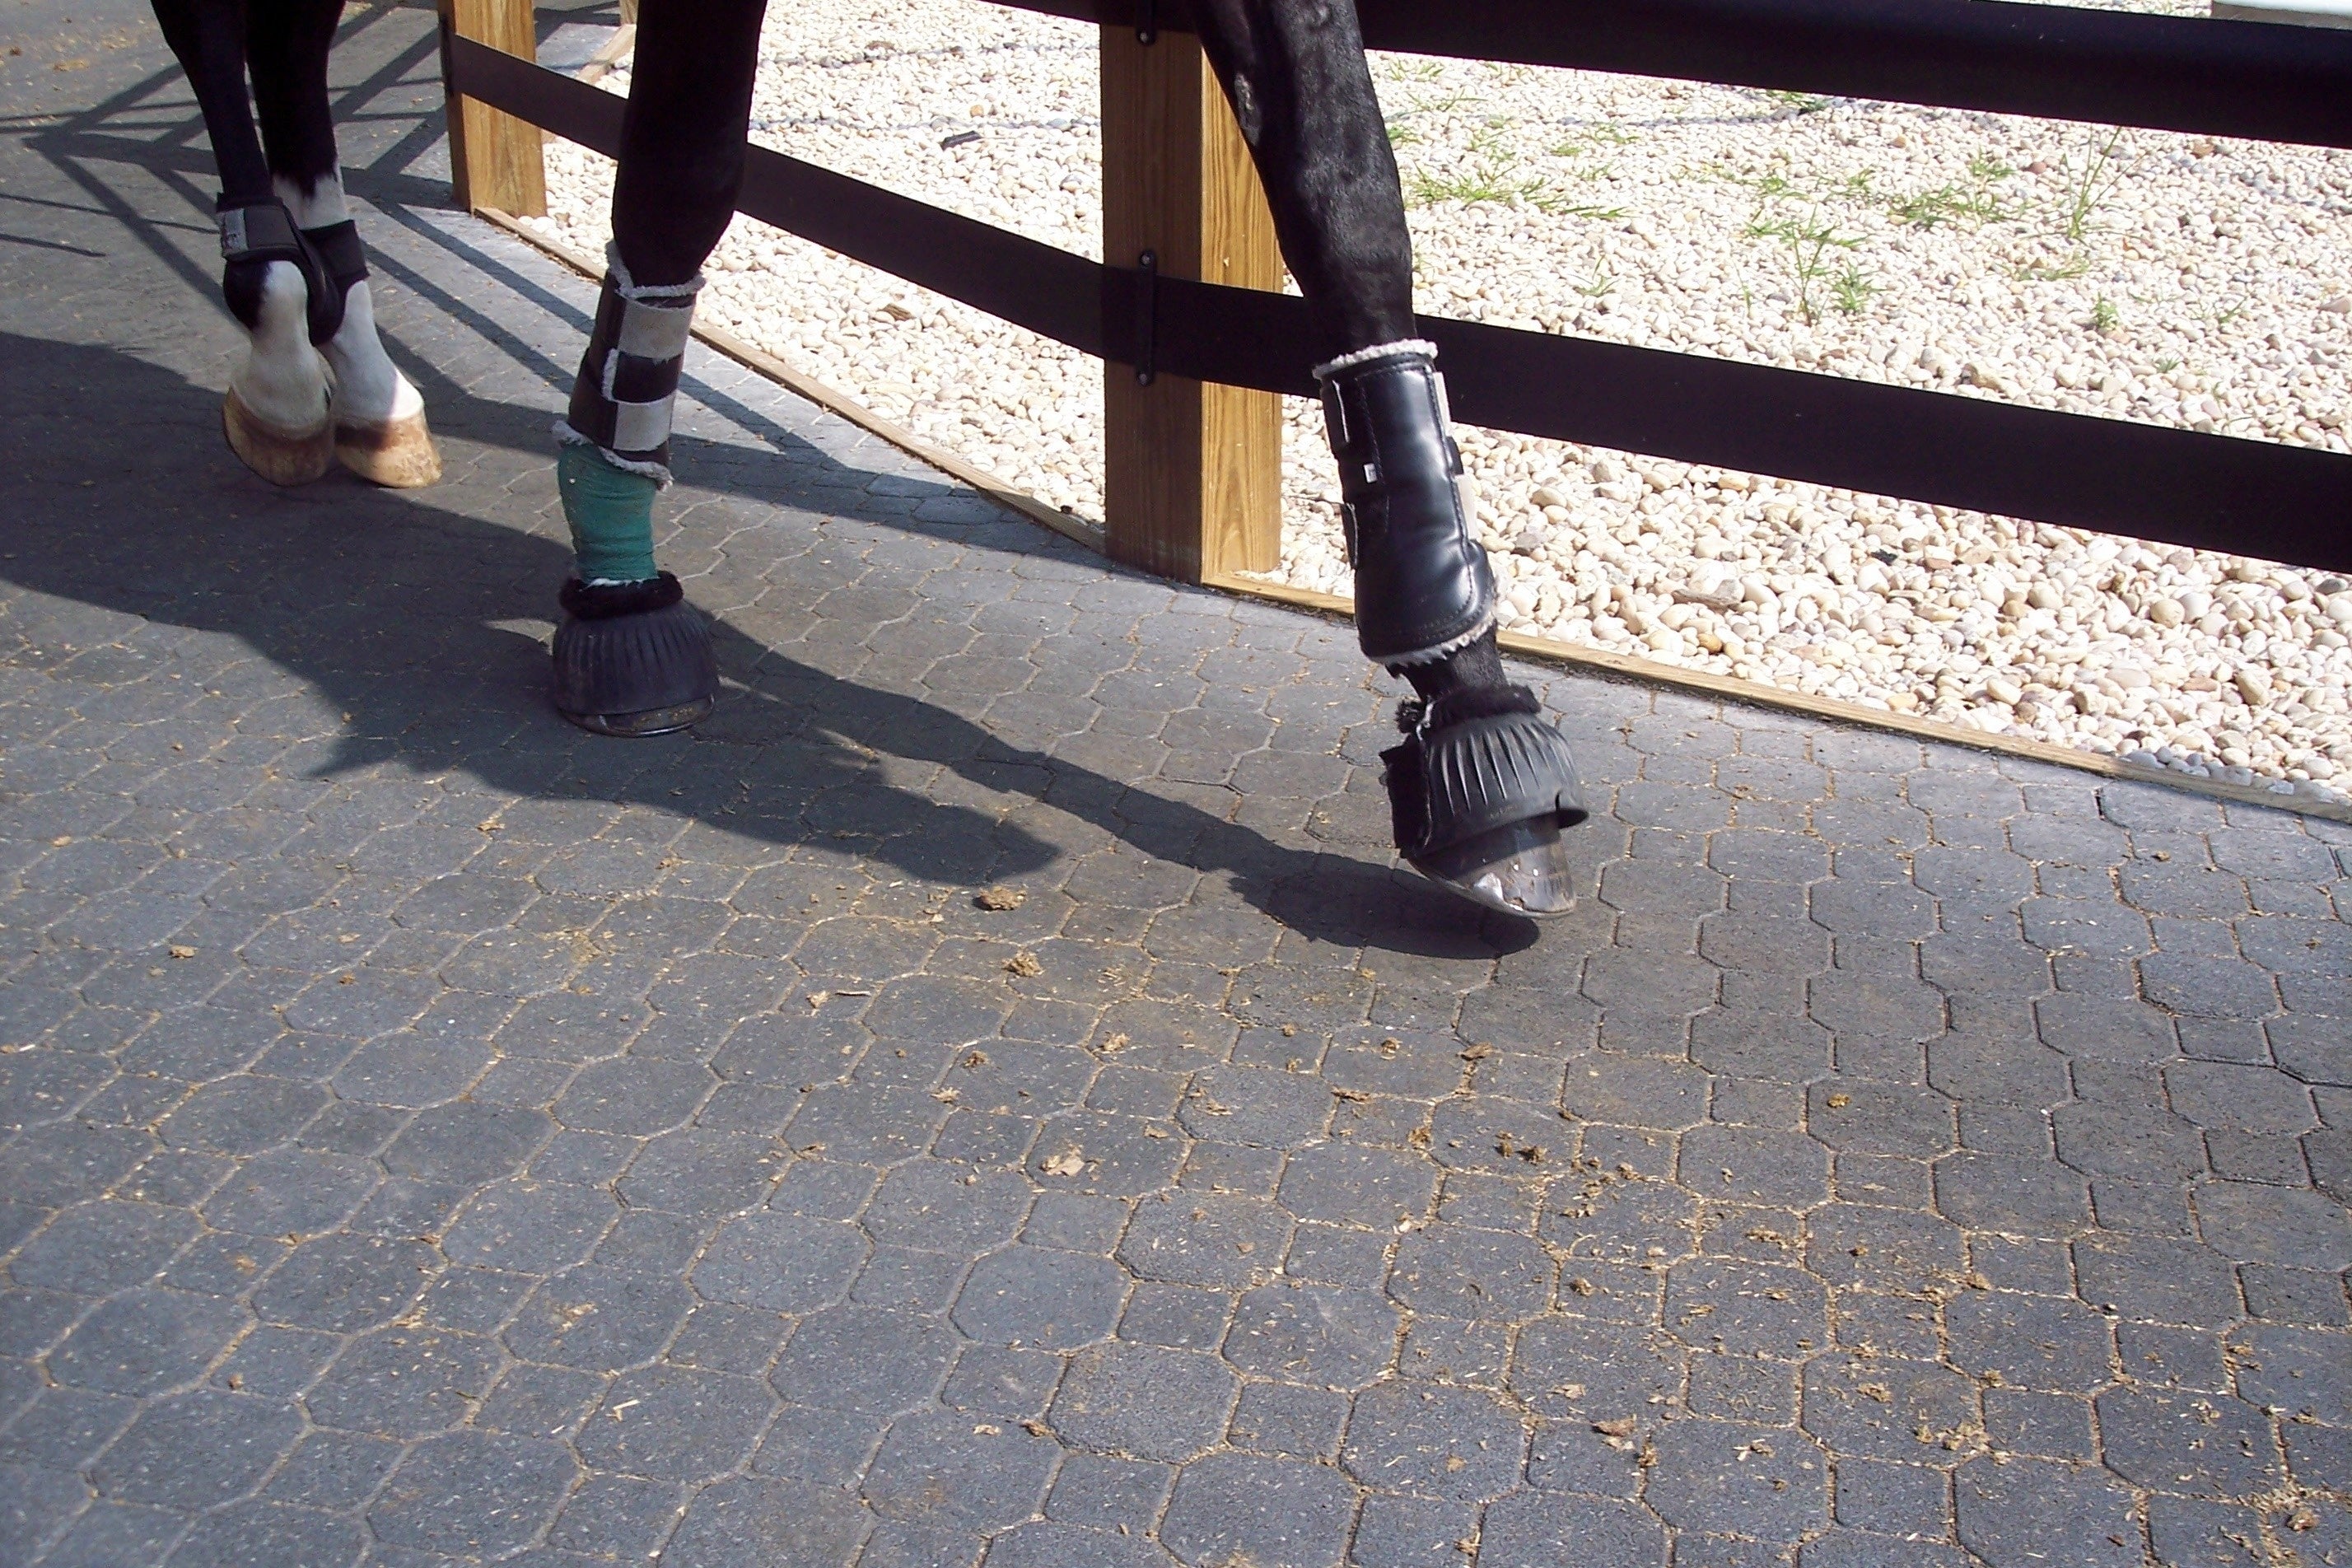 Horse walking on rubber interlock flooring outdoors, an ideal flooring solution for horses